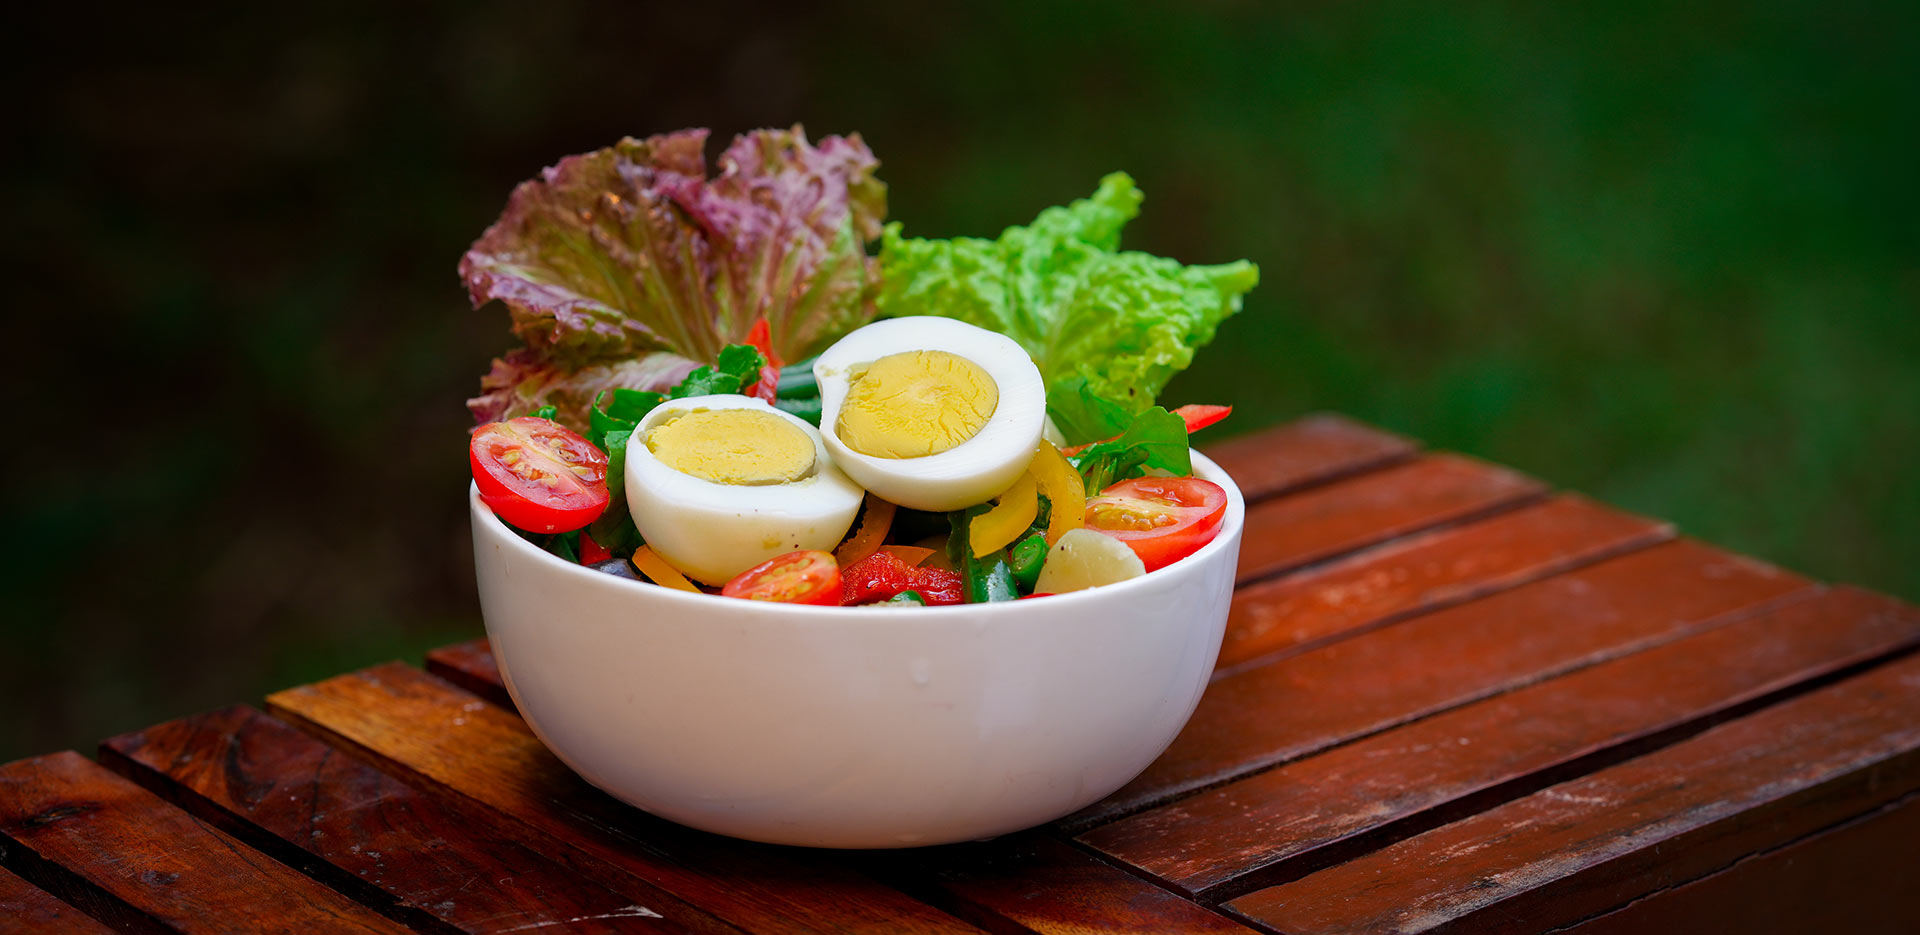 Egg, Beans and Potato Salad Recipe